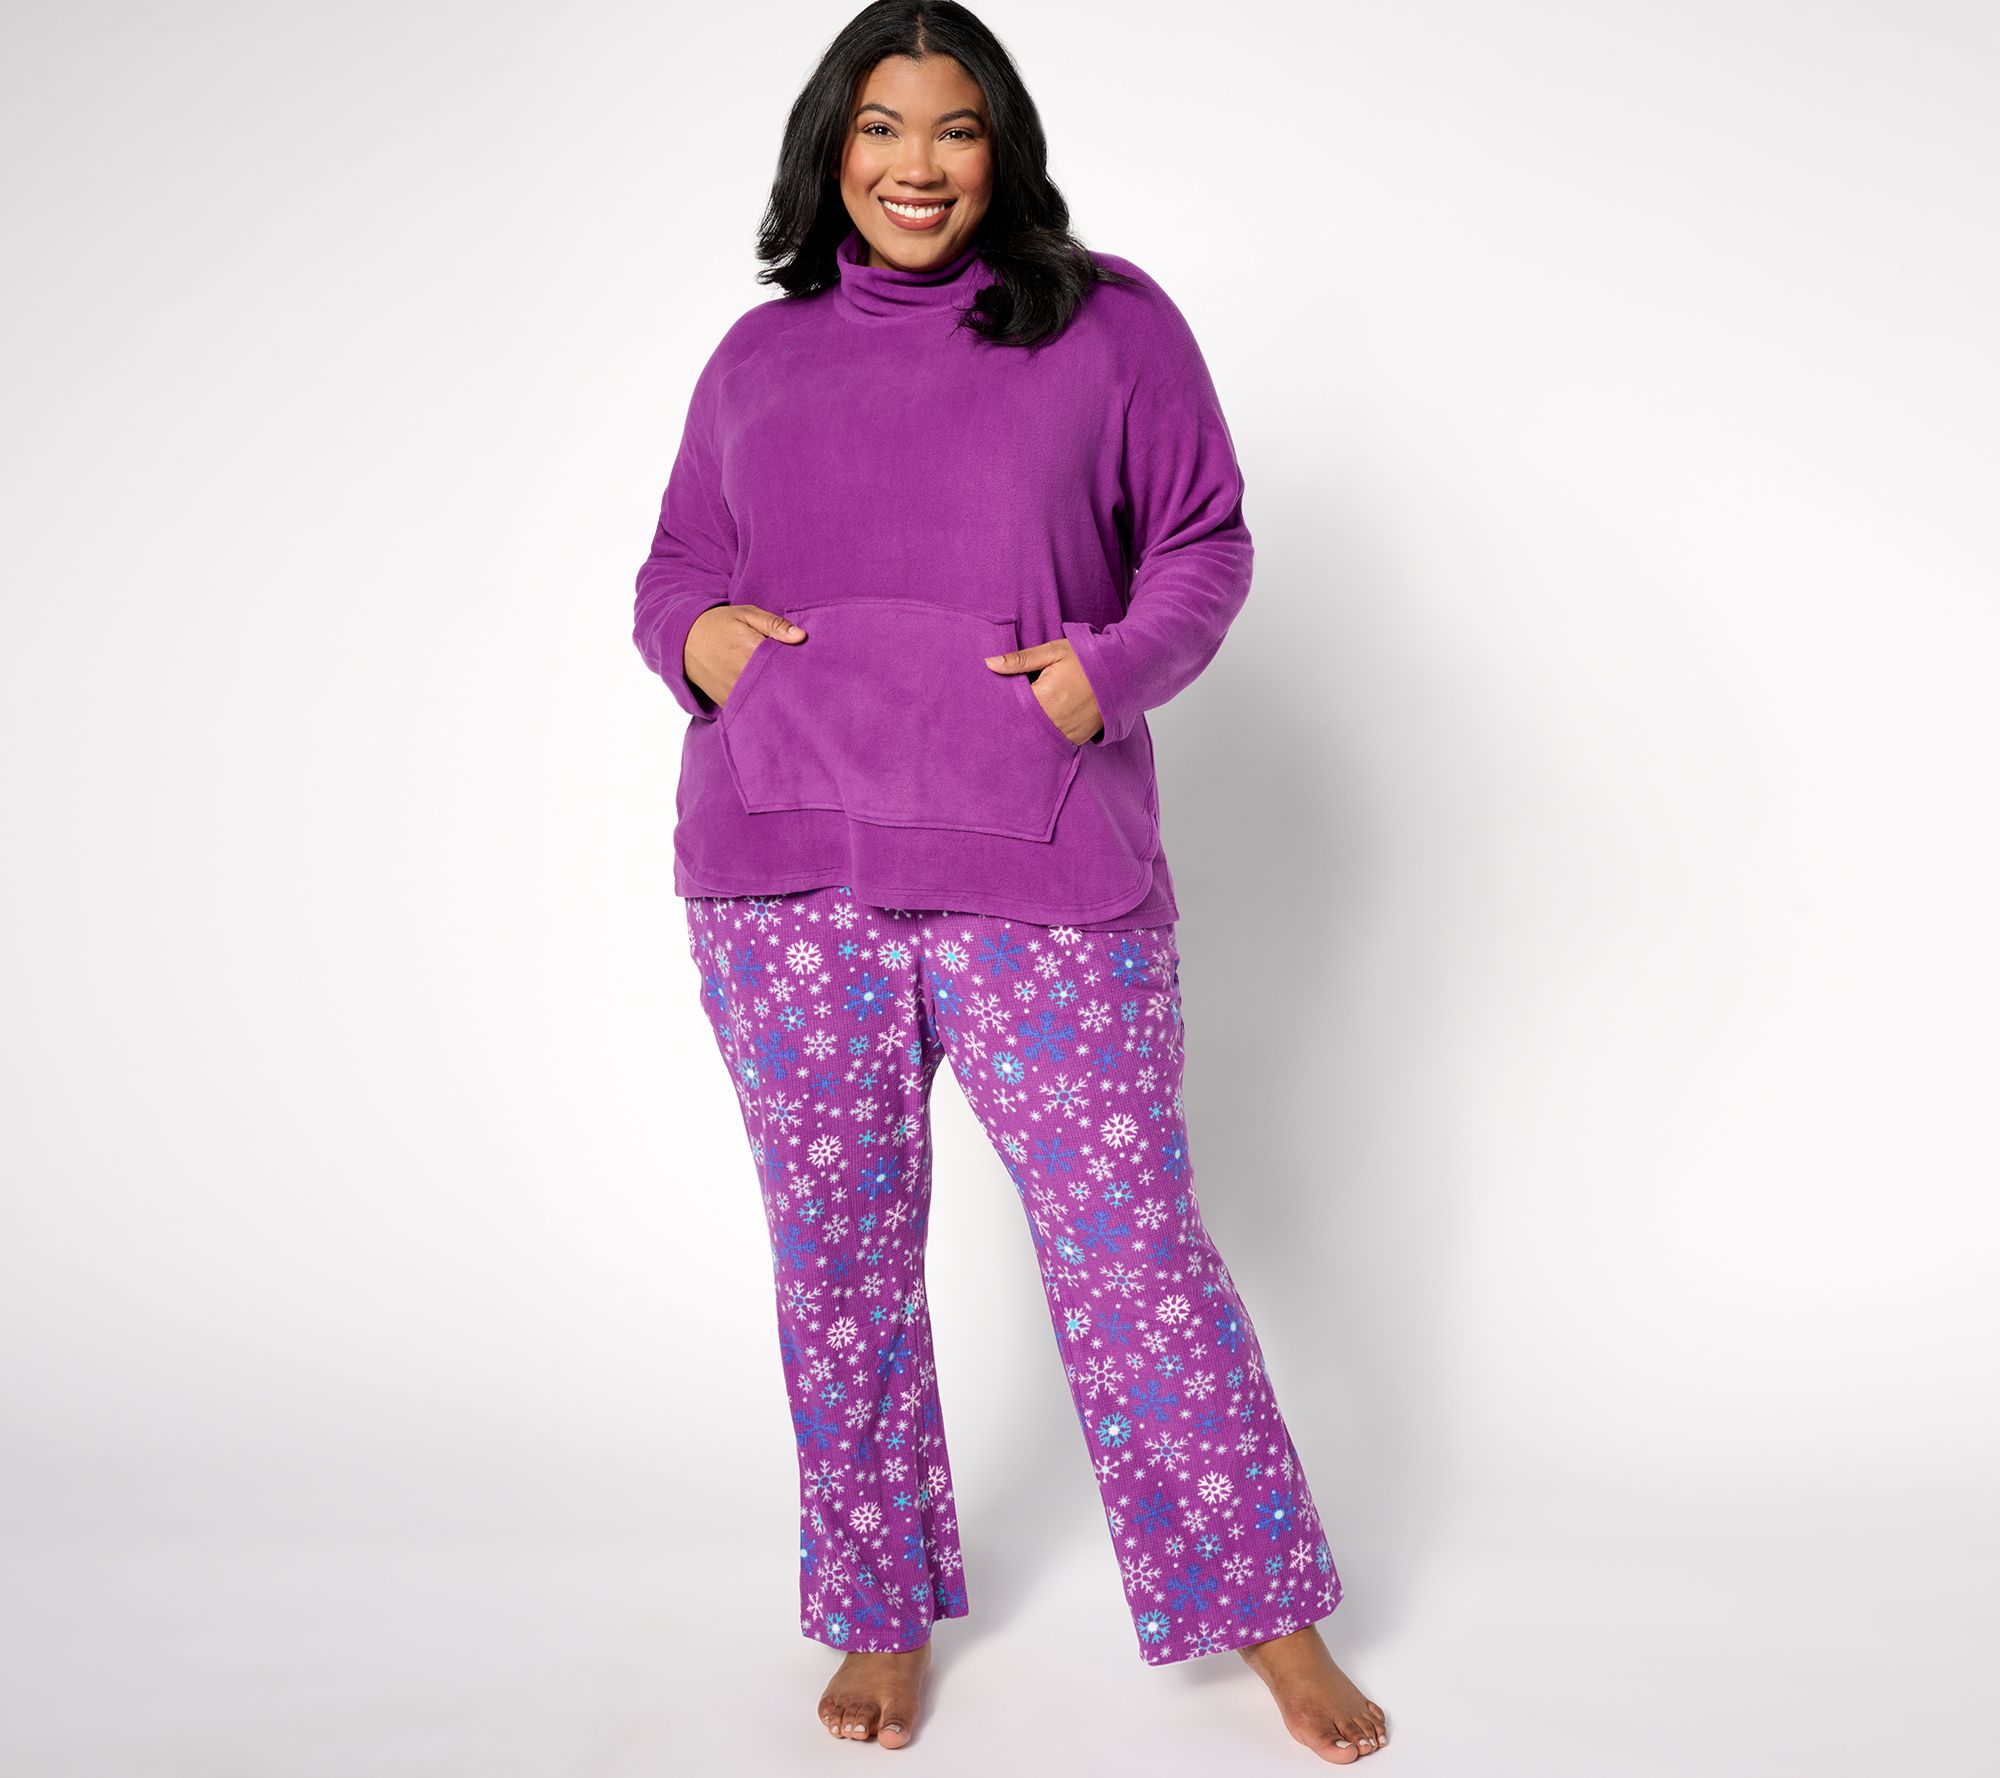 Dreams & Co. Women's Plus Size Knit Sleep Pant - 1x, Pink : Target